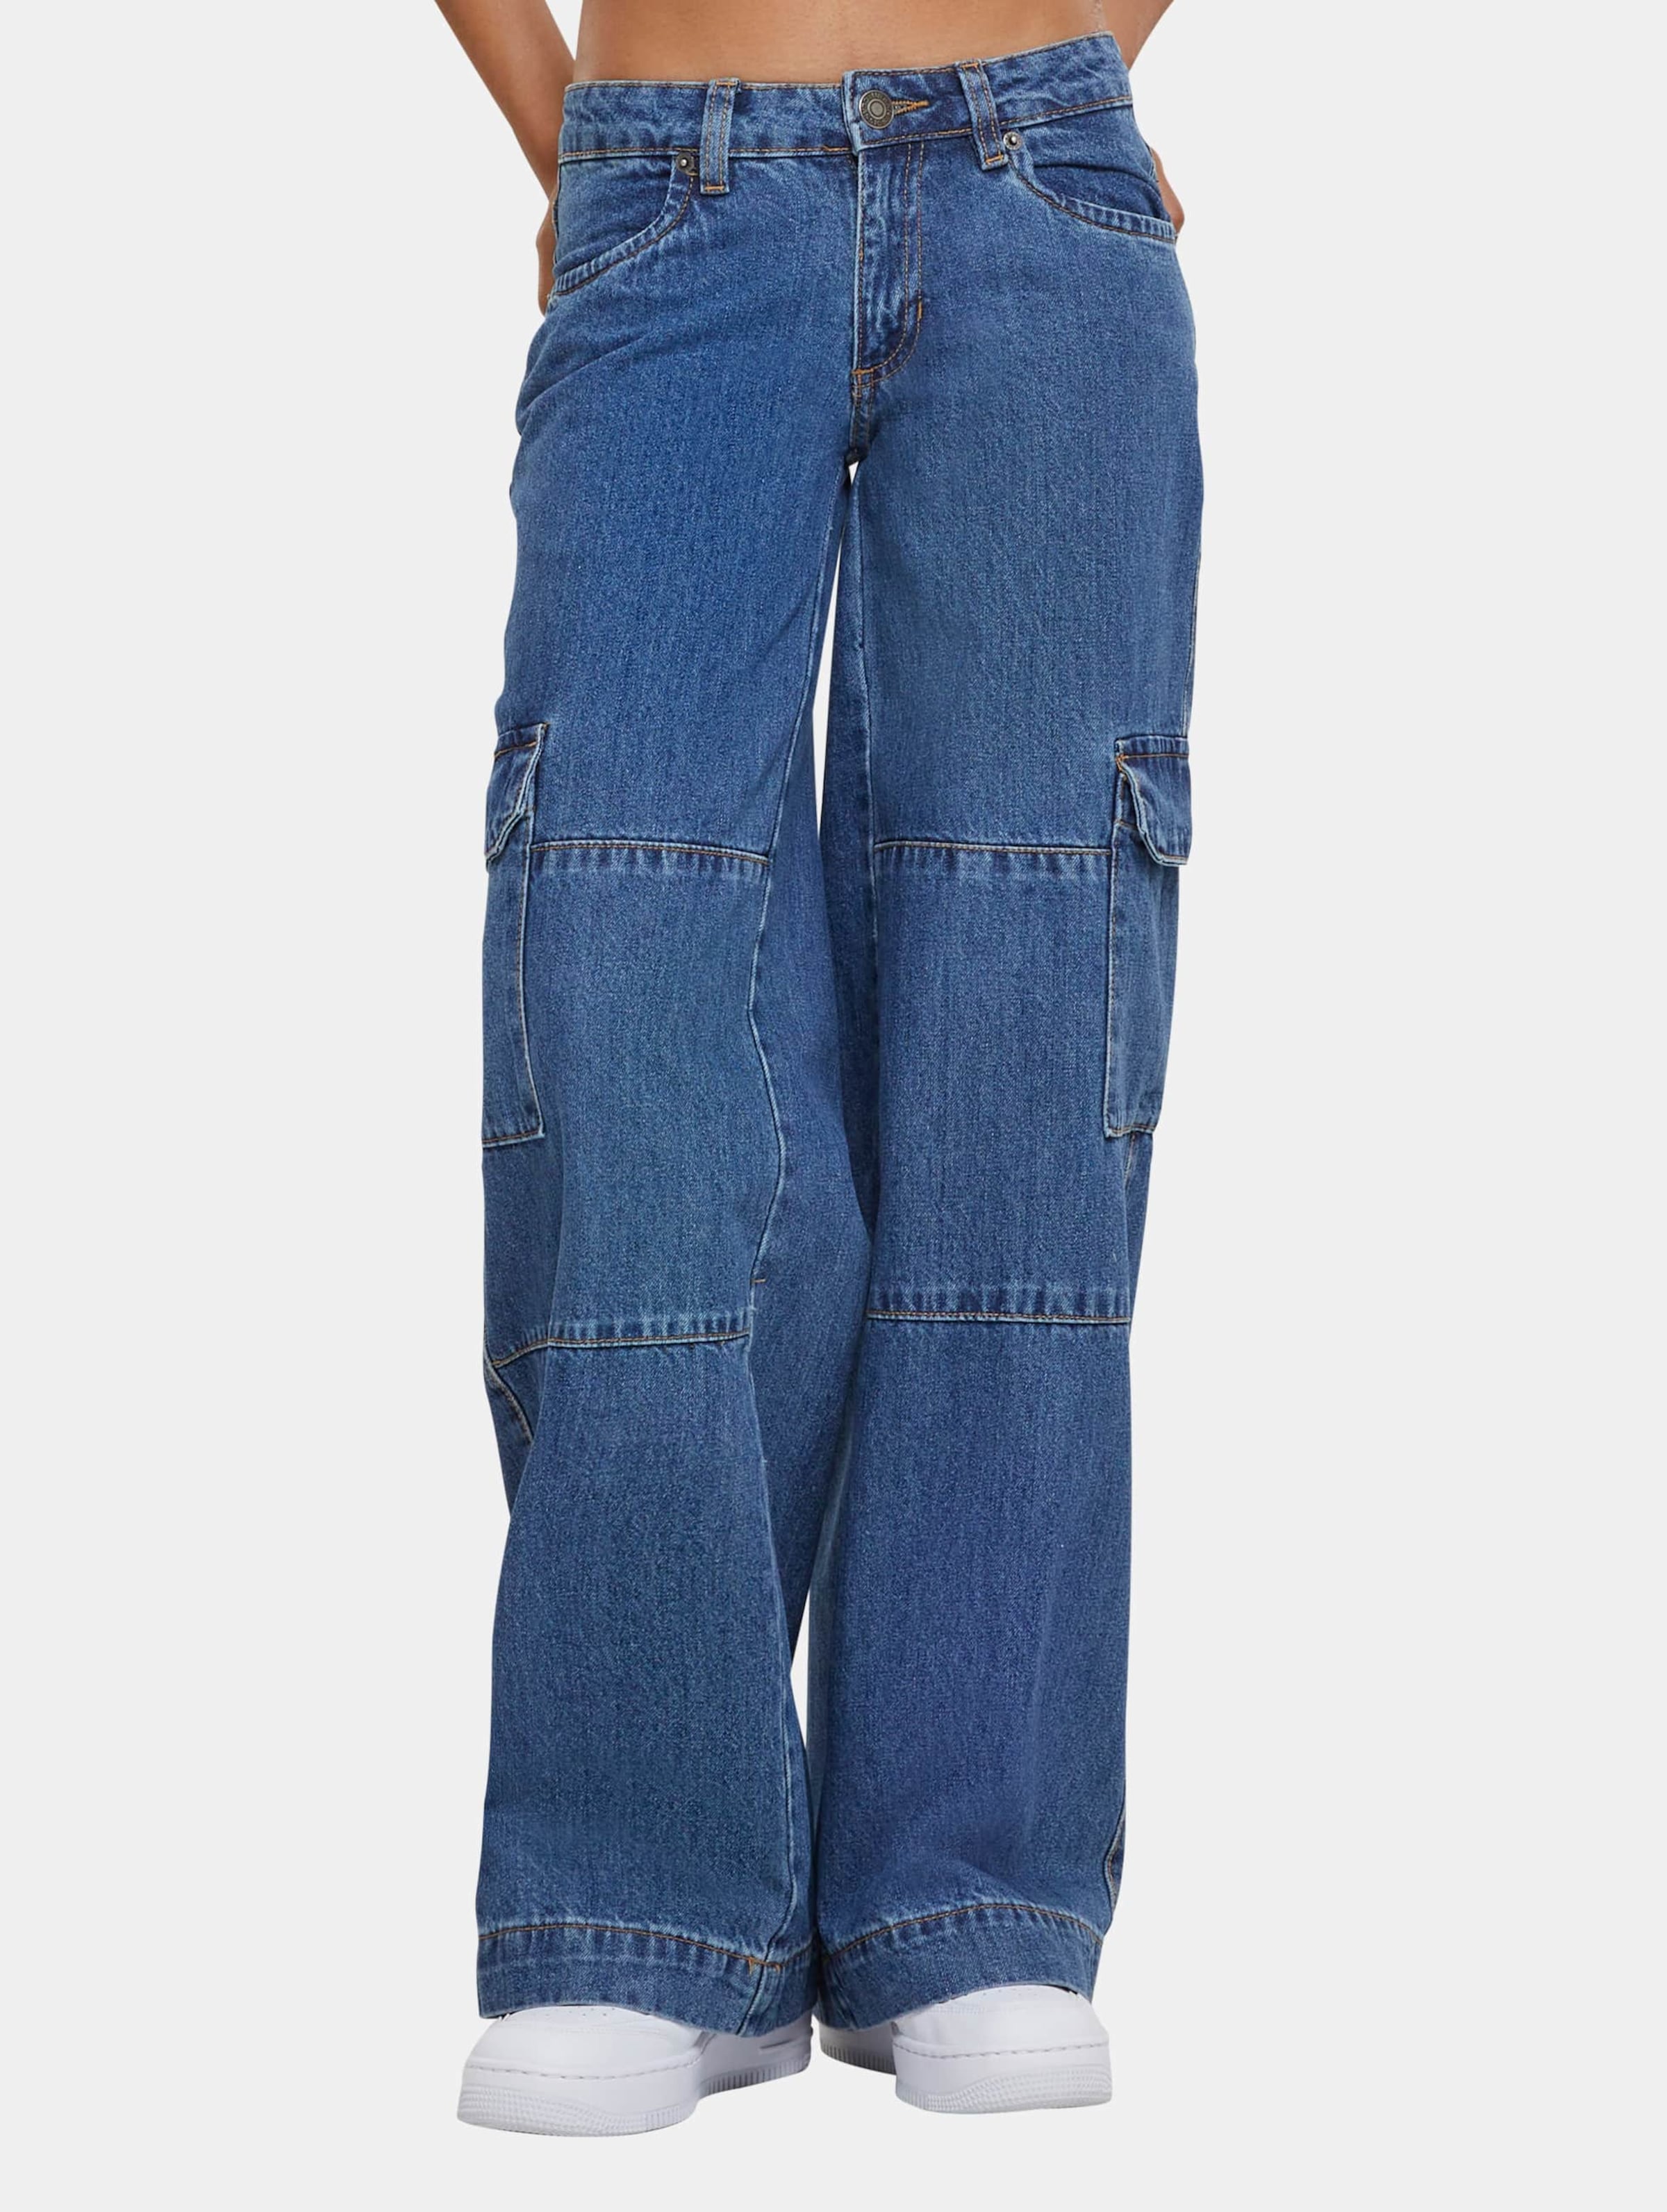 Urban Classics - Low Waist Denim Cargo trousers - Taille, 33 inch - Donkerblauw